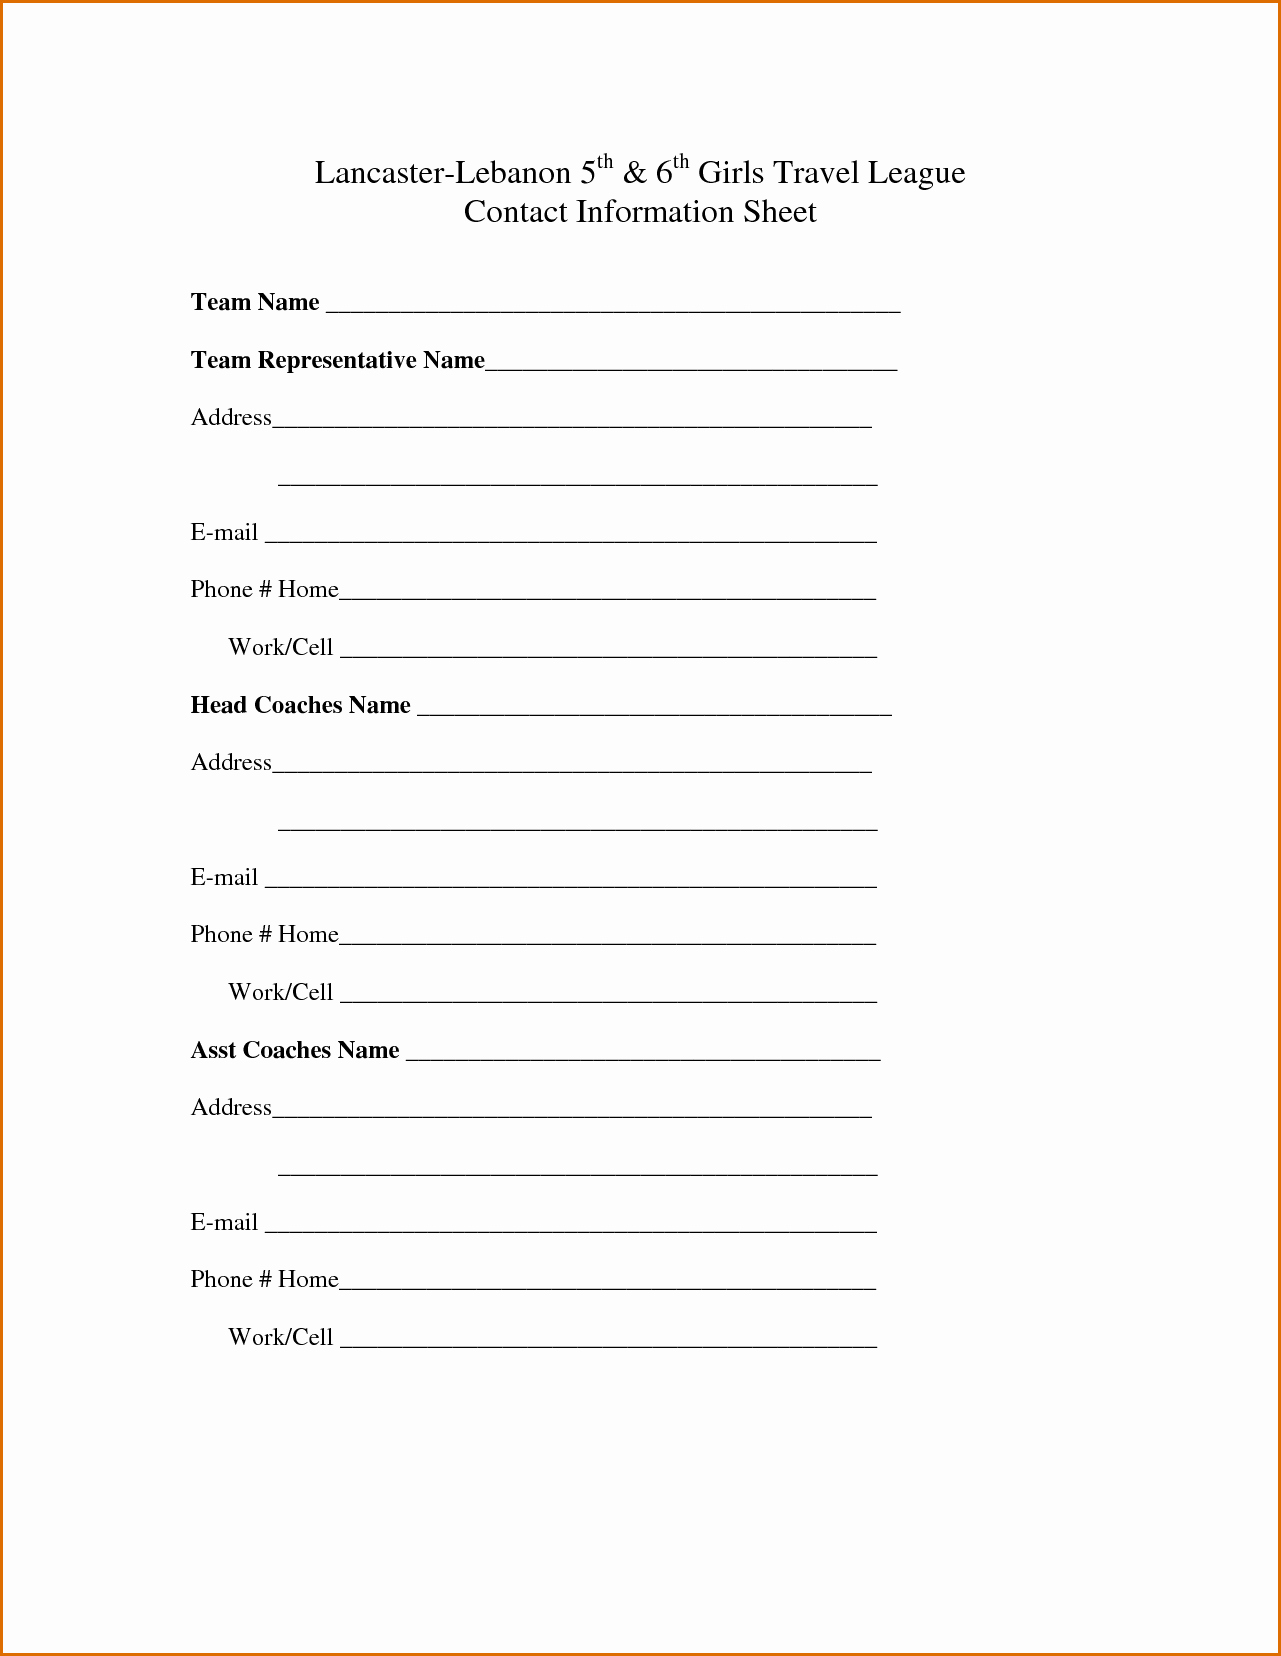 Contact Information form Template Beautiful 6 Contact Information Sheet